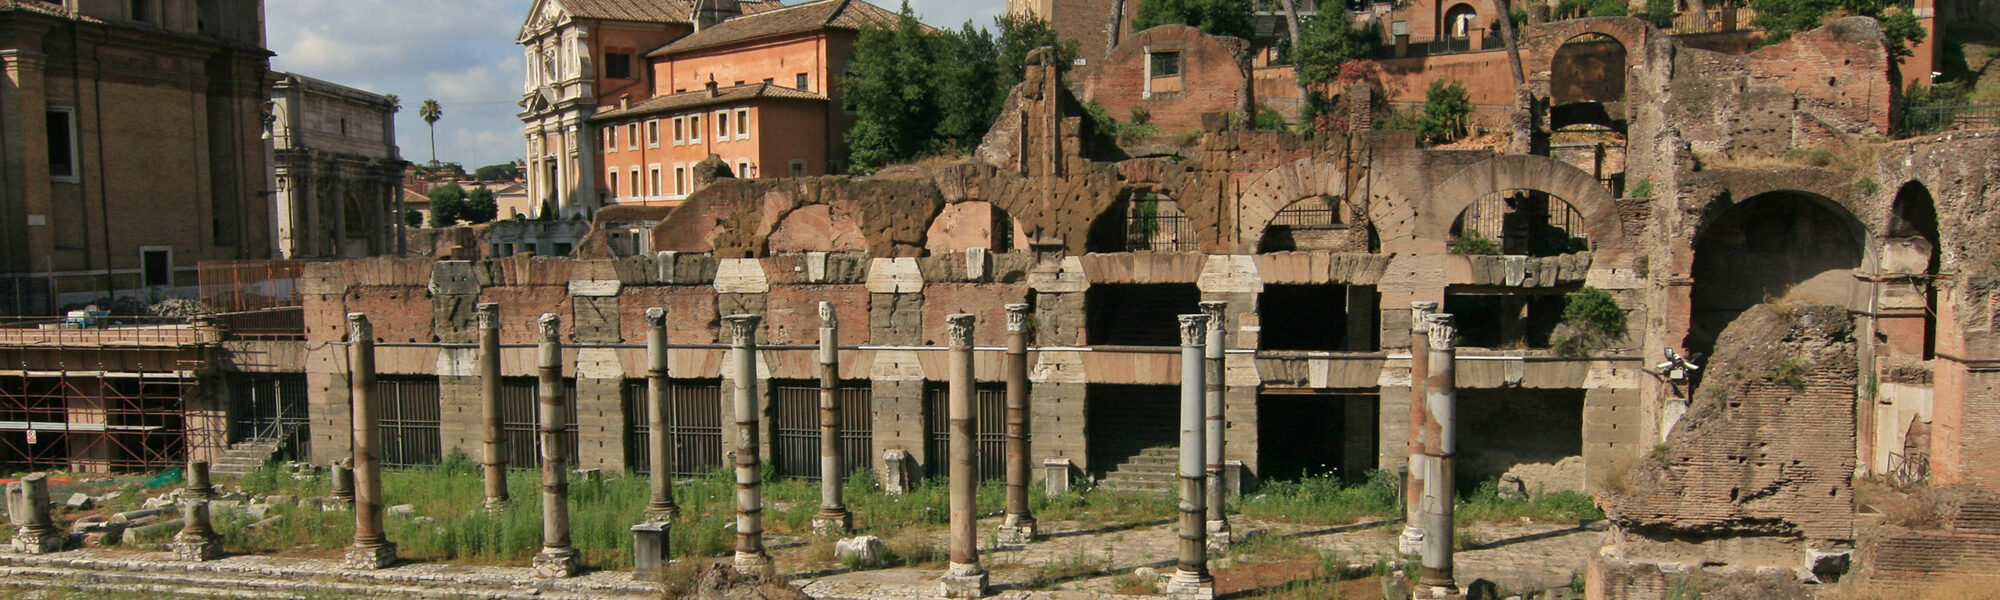 Forum van Caesar - Rome - Italië